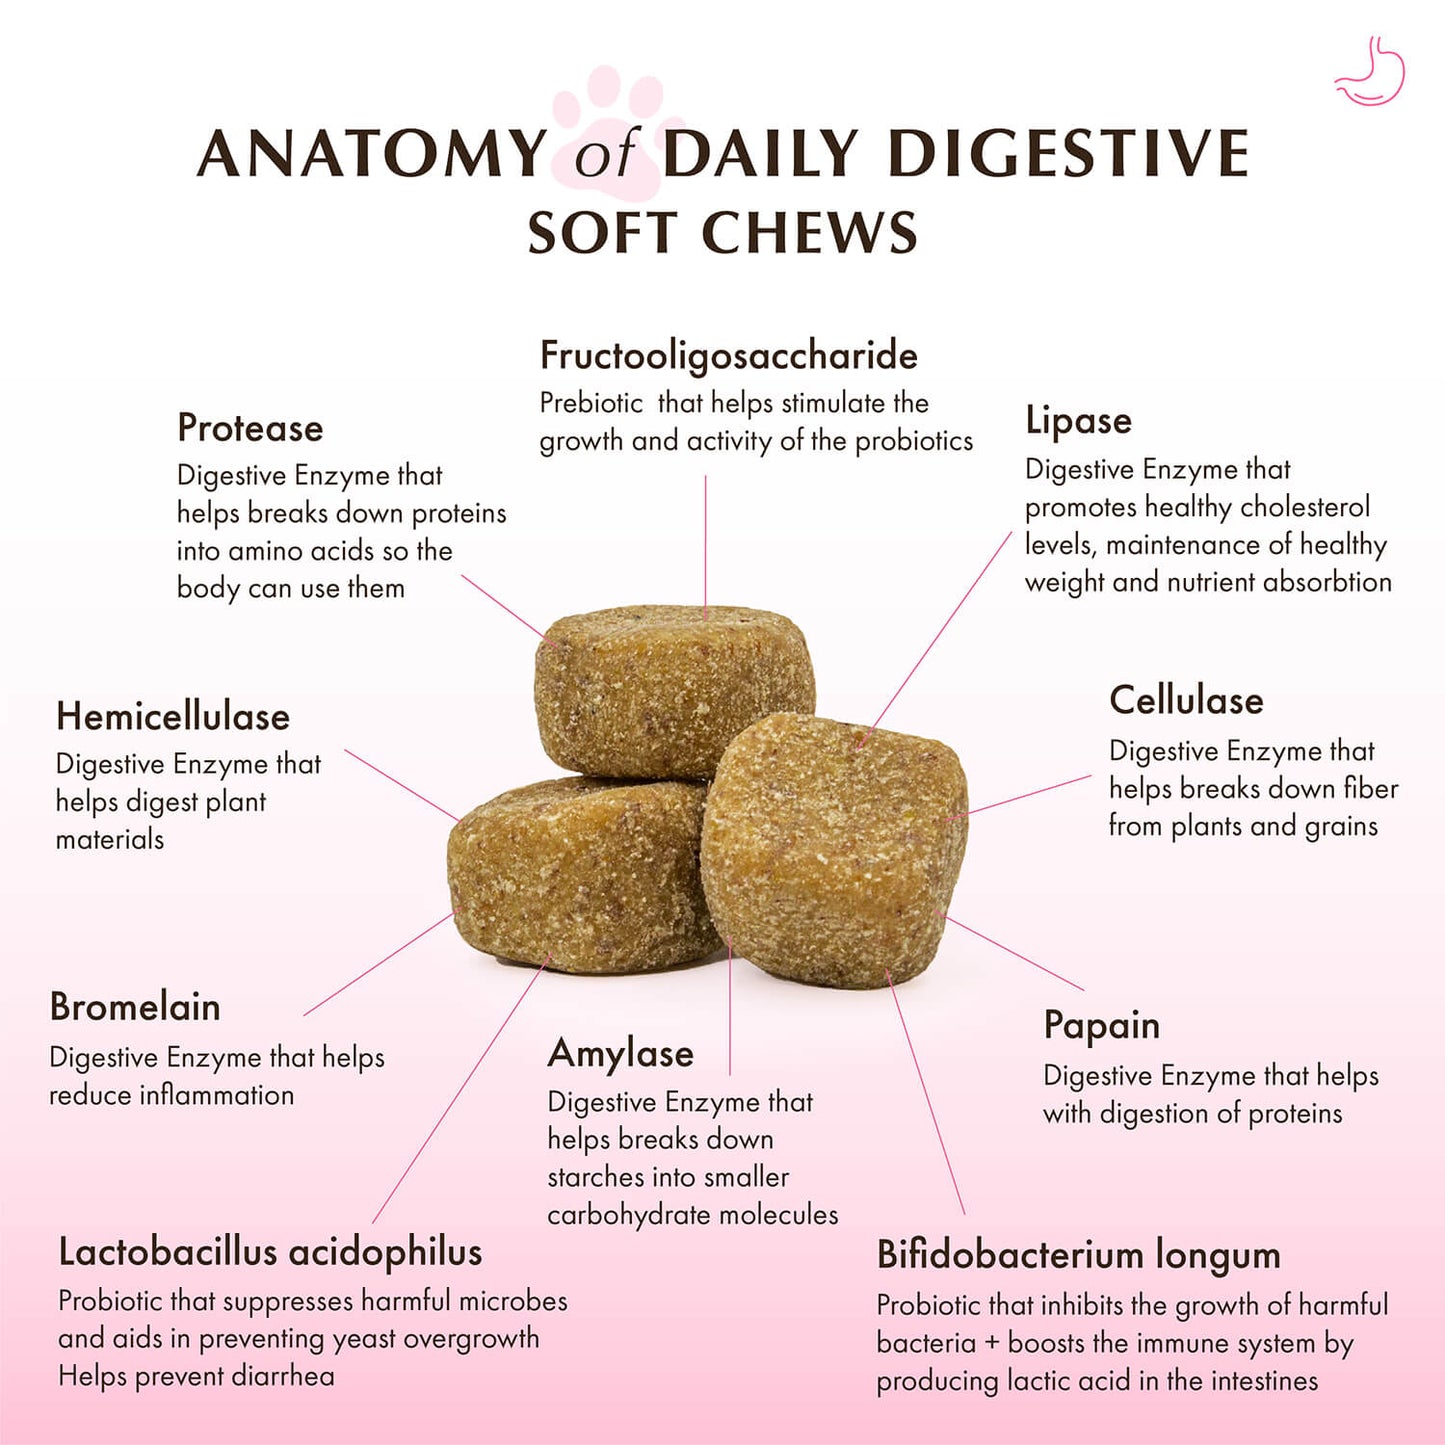 Daily Digestive Soft Chews